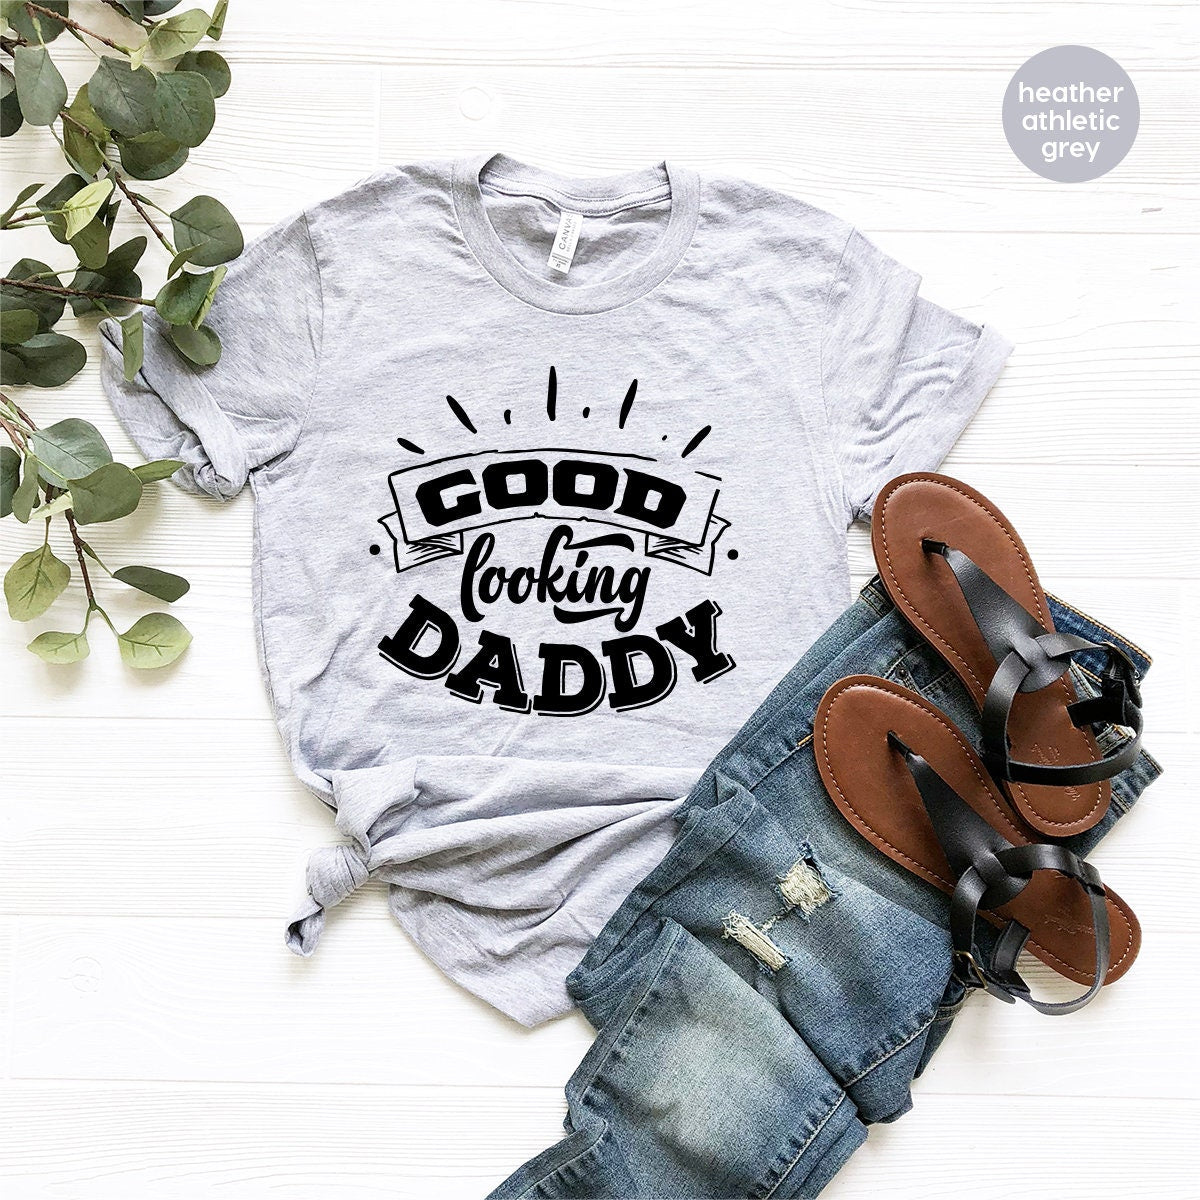 Good Looking Daddy Shirt, Best Dad T-Shirt, Dad Jokes Shirt, Gift For Dad, Funny Dad Shirt, Fatherhood Shirt, Father’s Day Shirt, Dad Gift - Fastdeliverytees.com